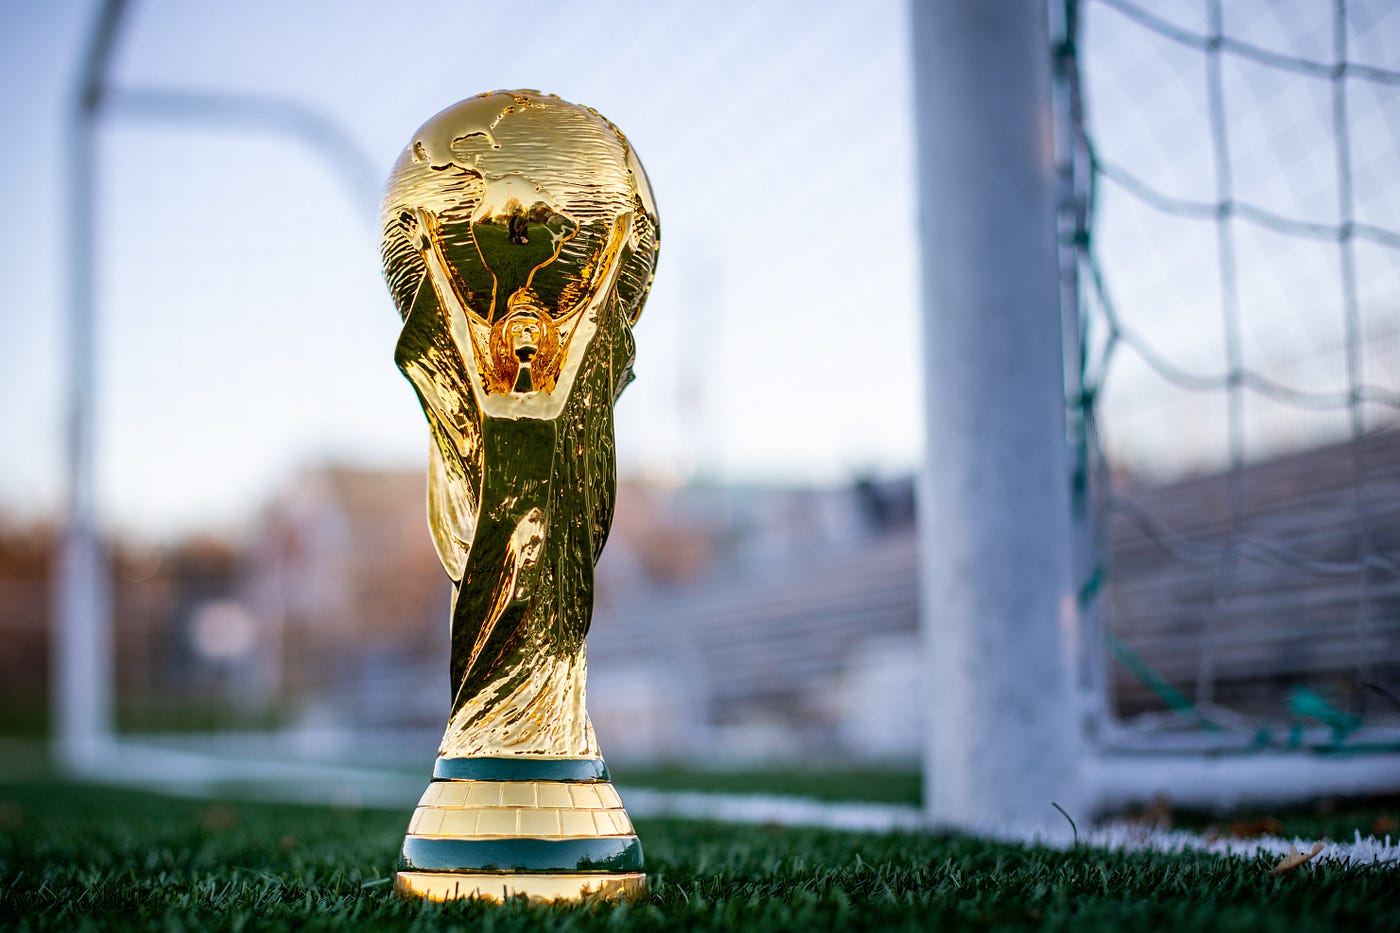 Fifa World Cup Winner Prediction Template